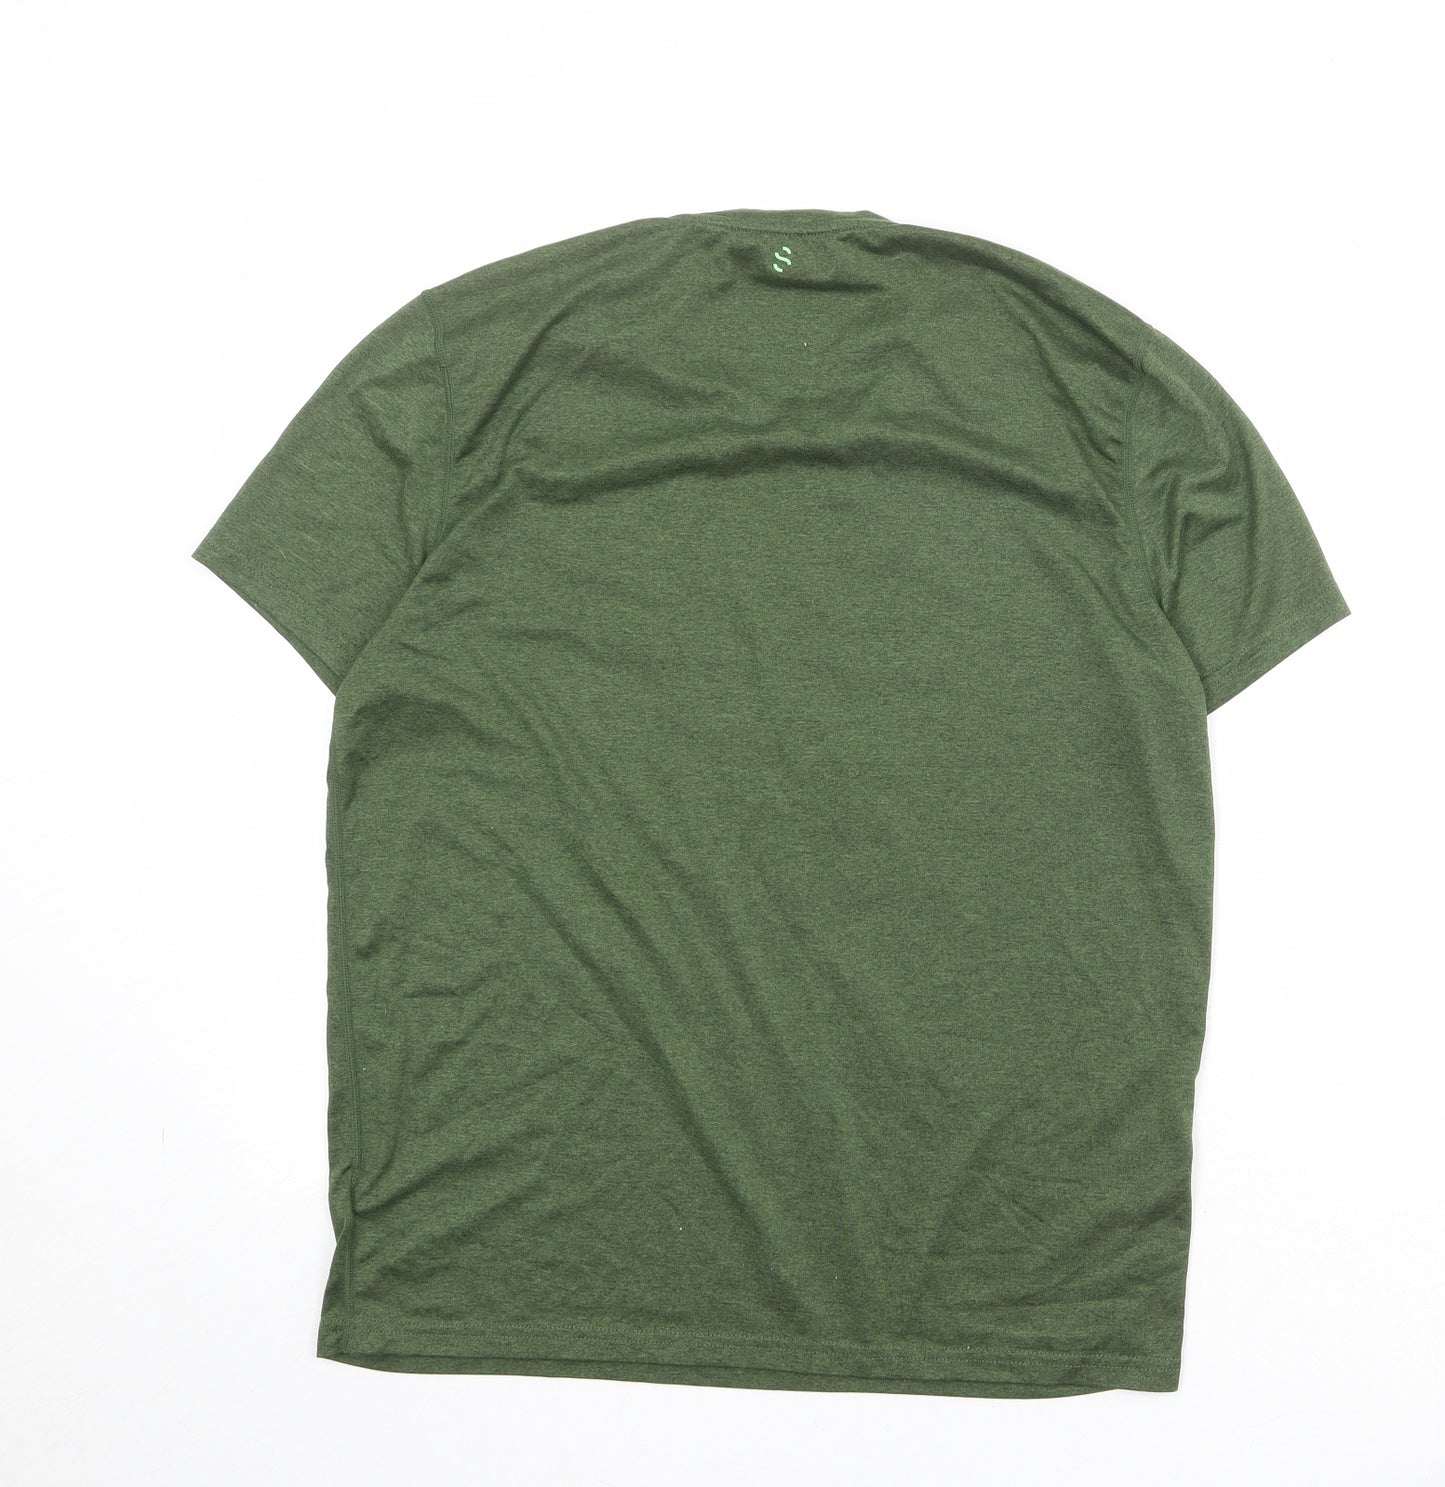 H&M Mens Green Polyester T-Shirt Size M Round Neck - Team Massive MMXIV